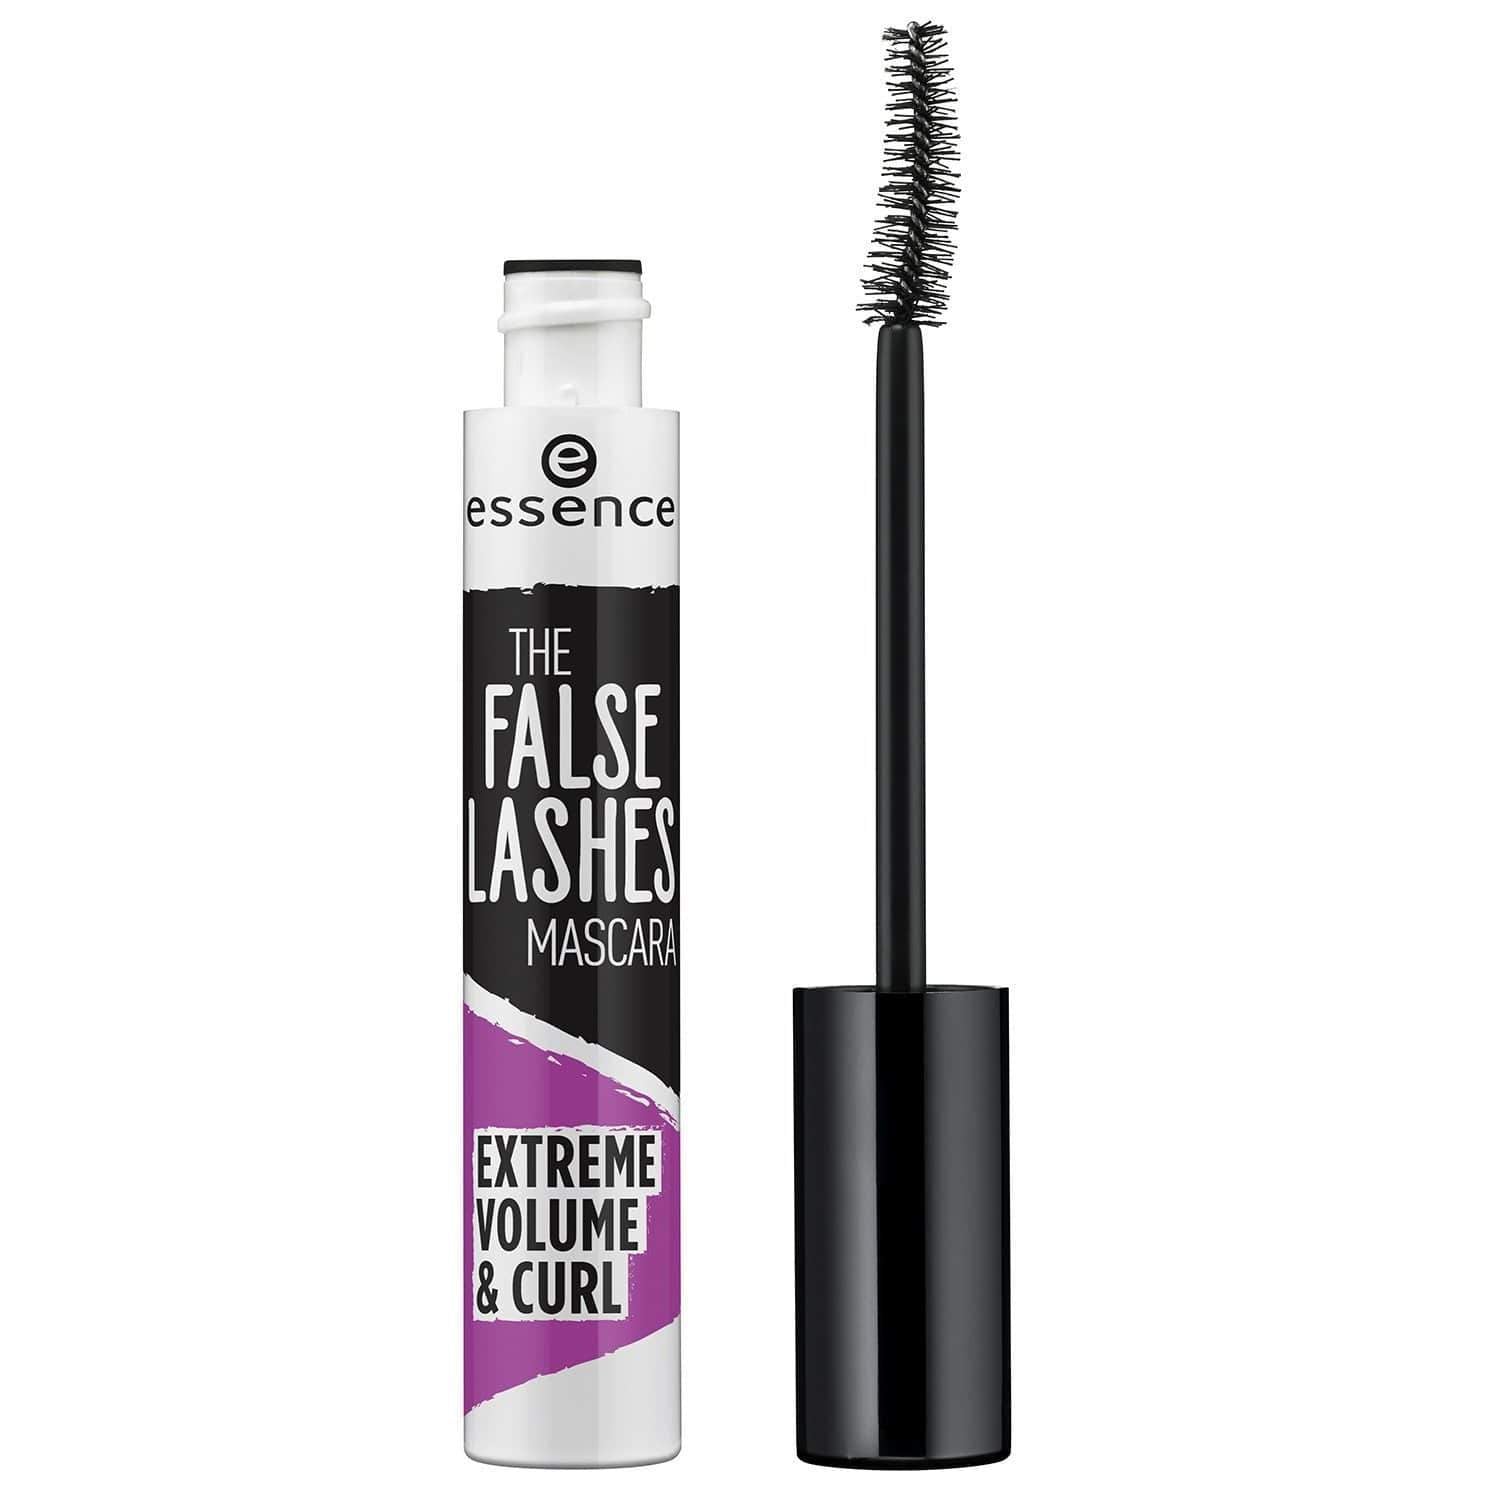 essence | The False Lashes Mascara Extreme Volume and Curl Minoustore